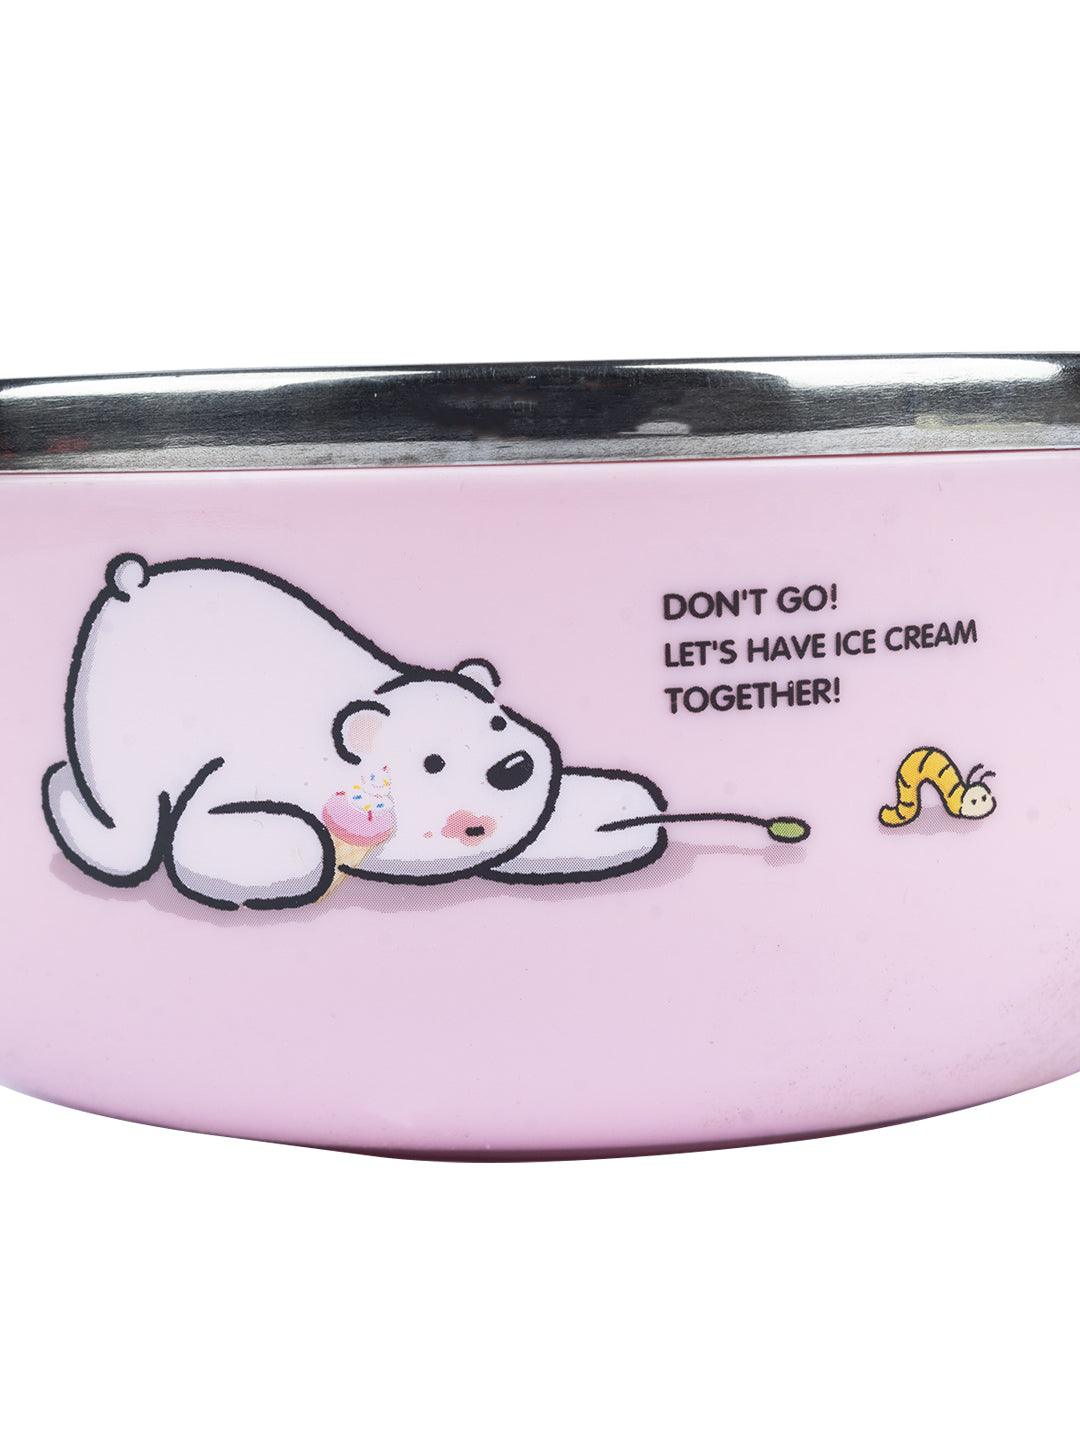 Adorable Playful Bear Kids Bowl - 400ml Pink Plastic Bowl